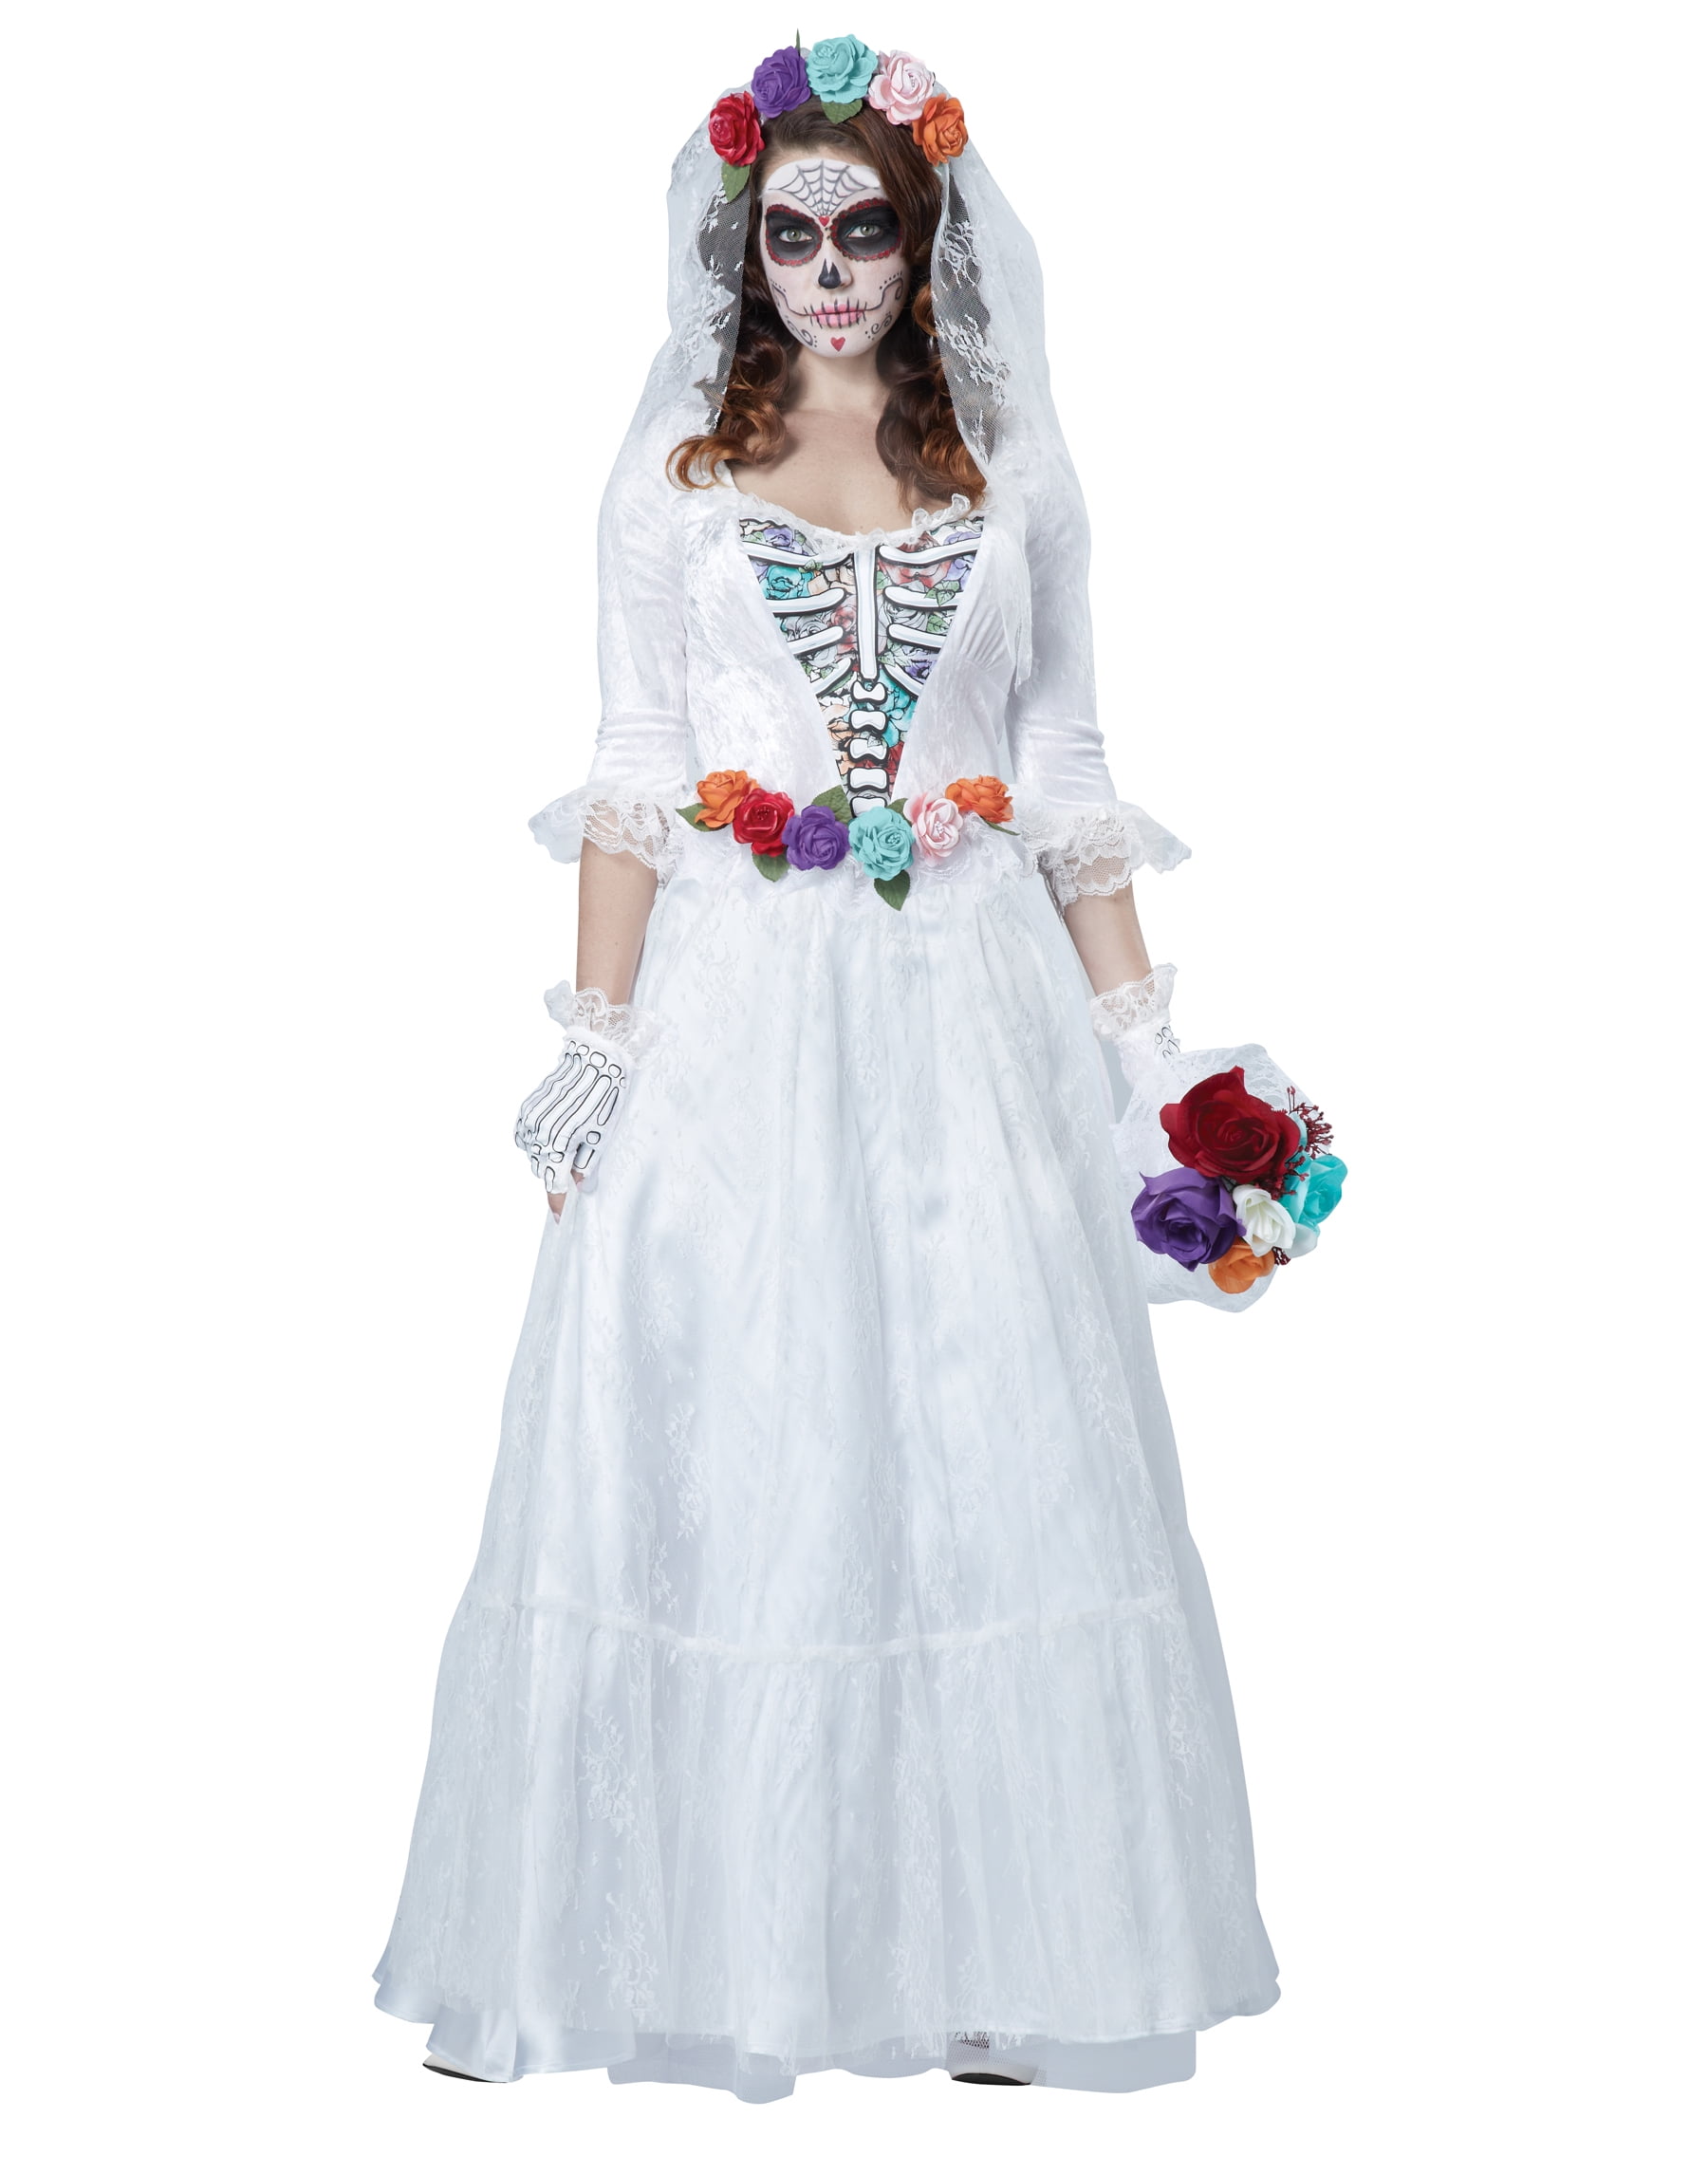 Dead Bride Halloween Costume, Bride Halloween Outfit, White Bride